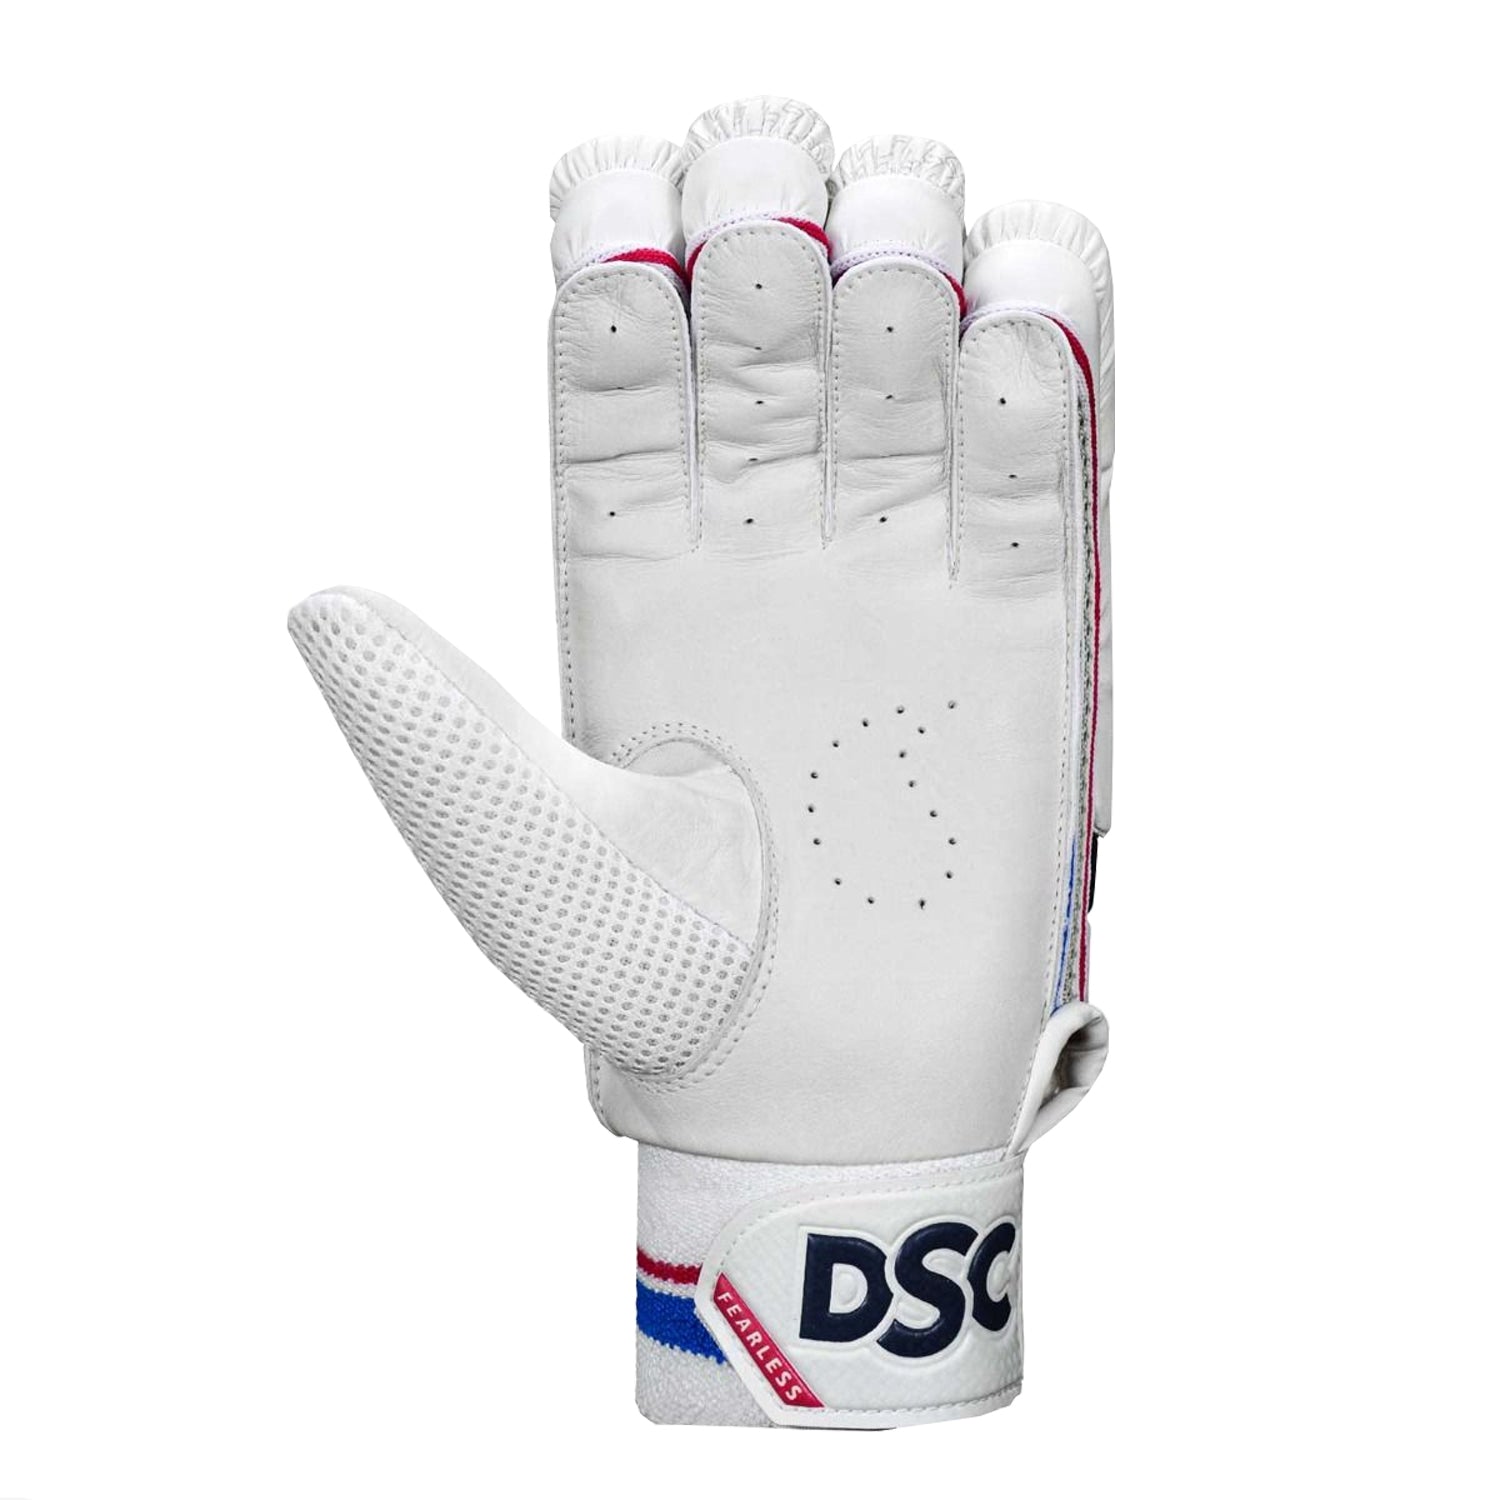 DSC Intense Valor RH Batting Gloves - Best Price online Prokicksports.com